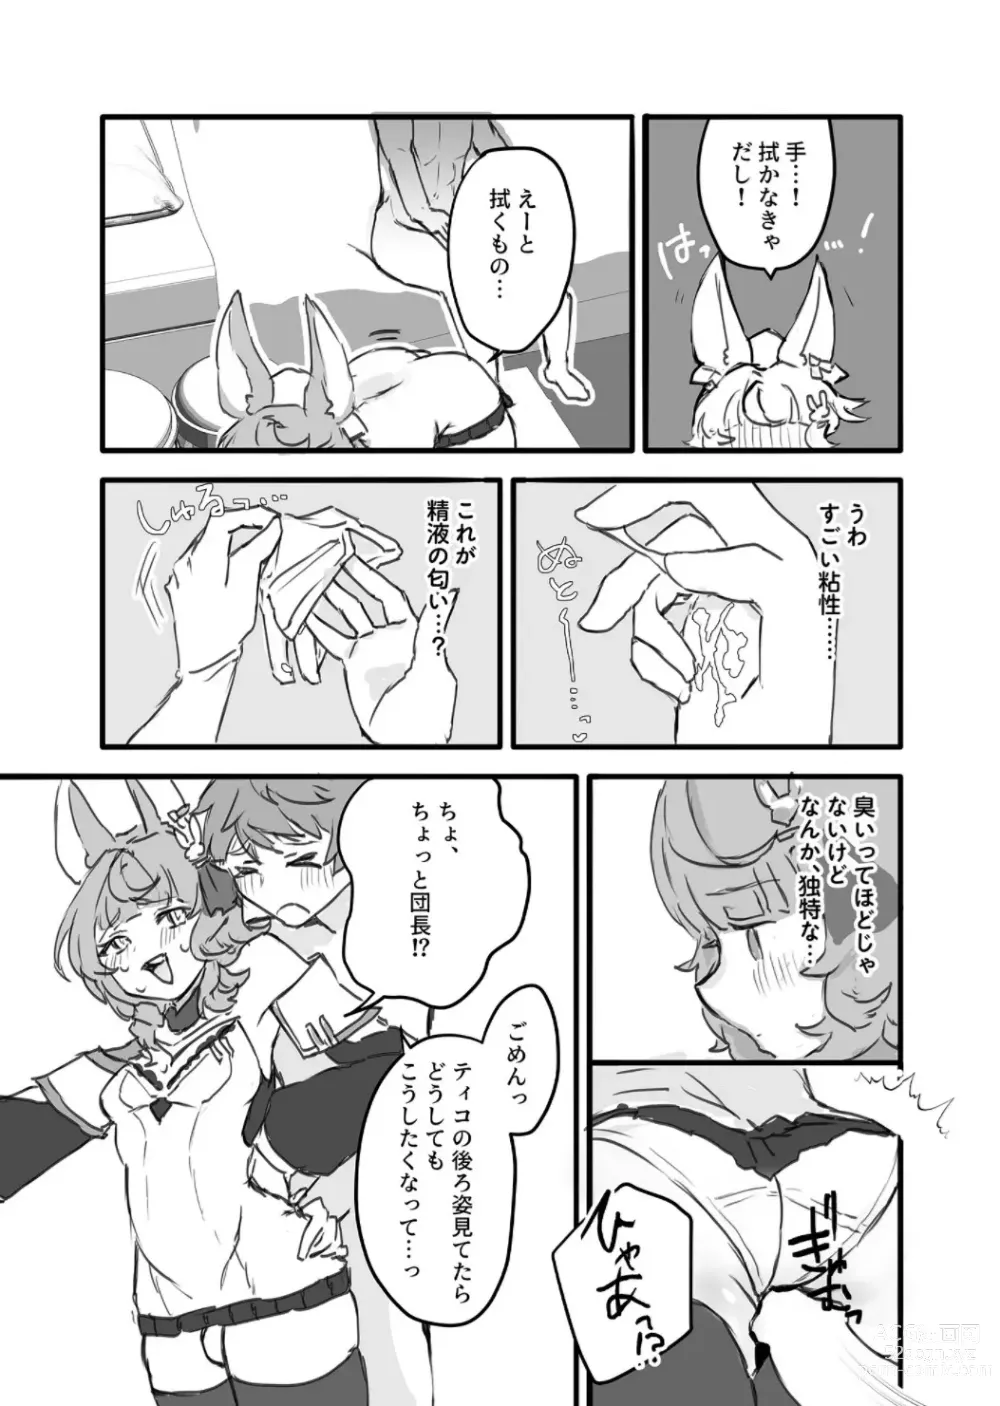 Page 10 of doujinshi Kore, Nani ka Shitteru?